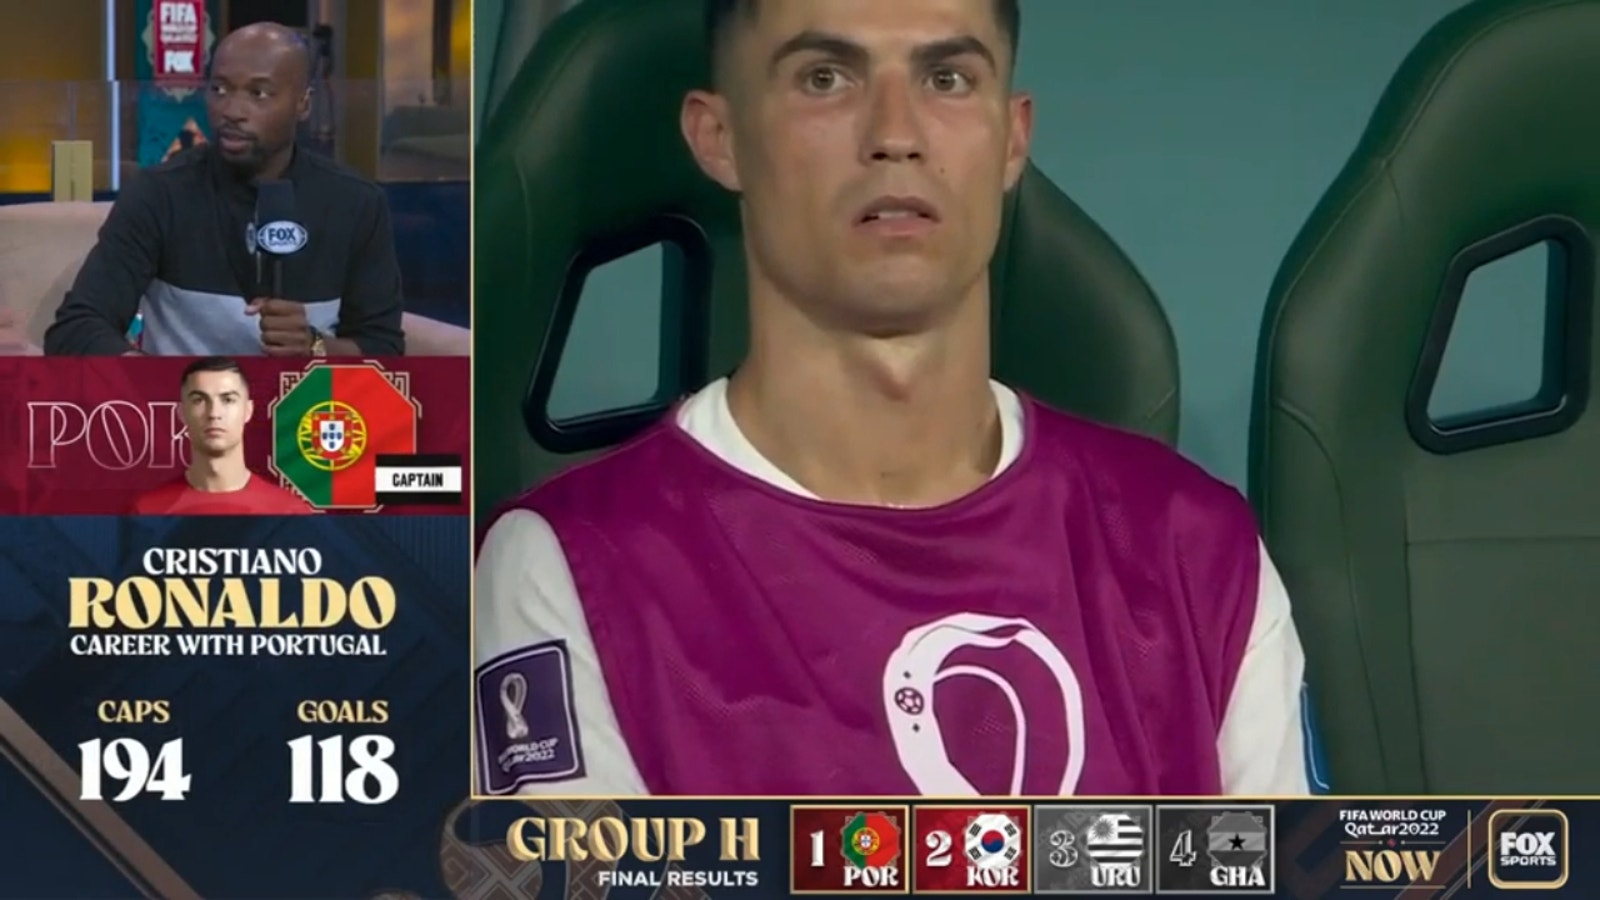 The Ronaldo Effect for Portugal